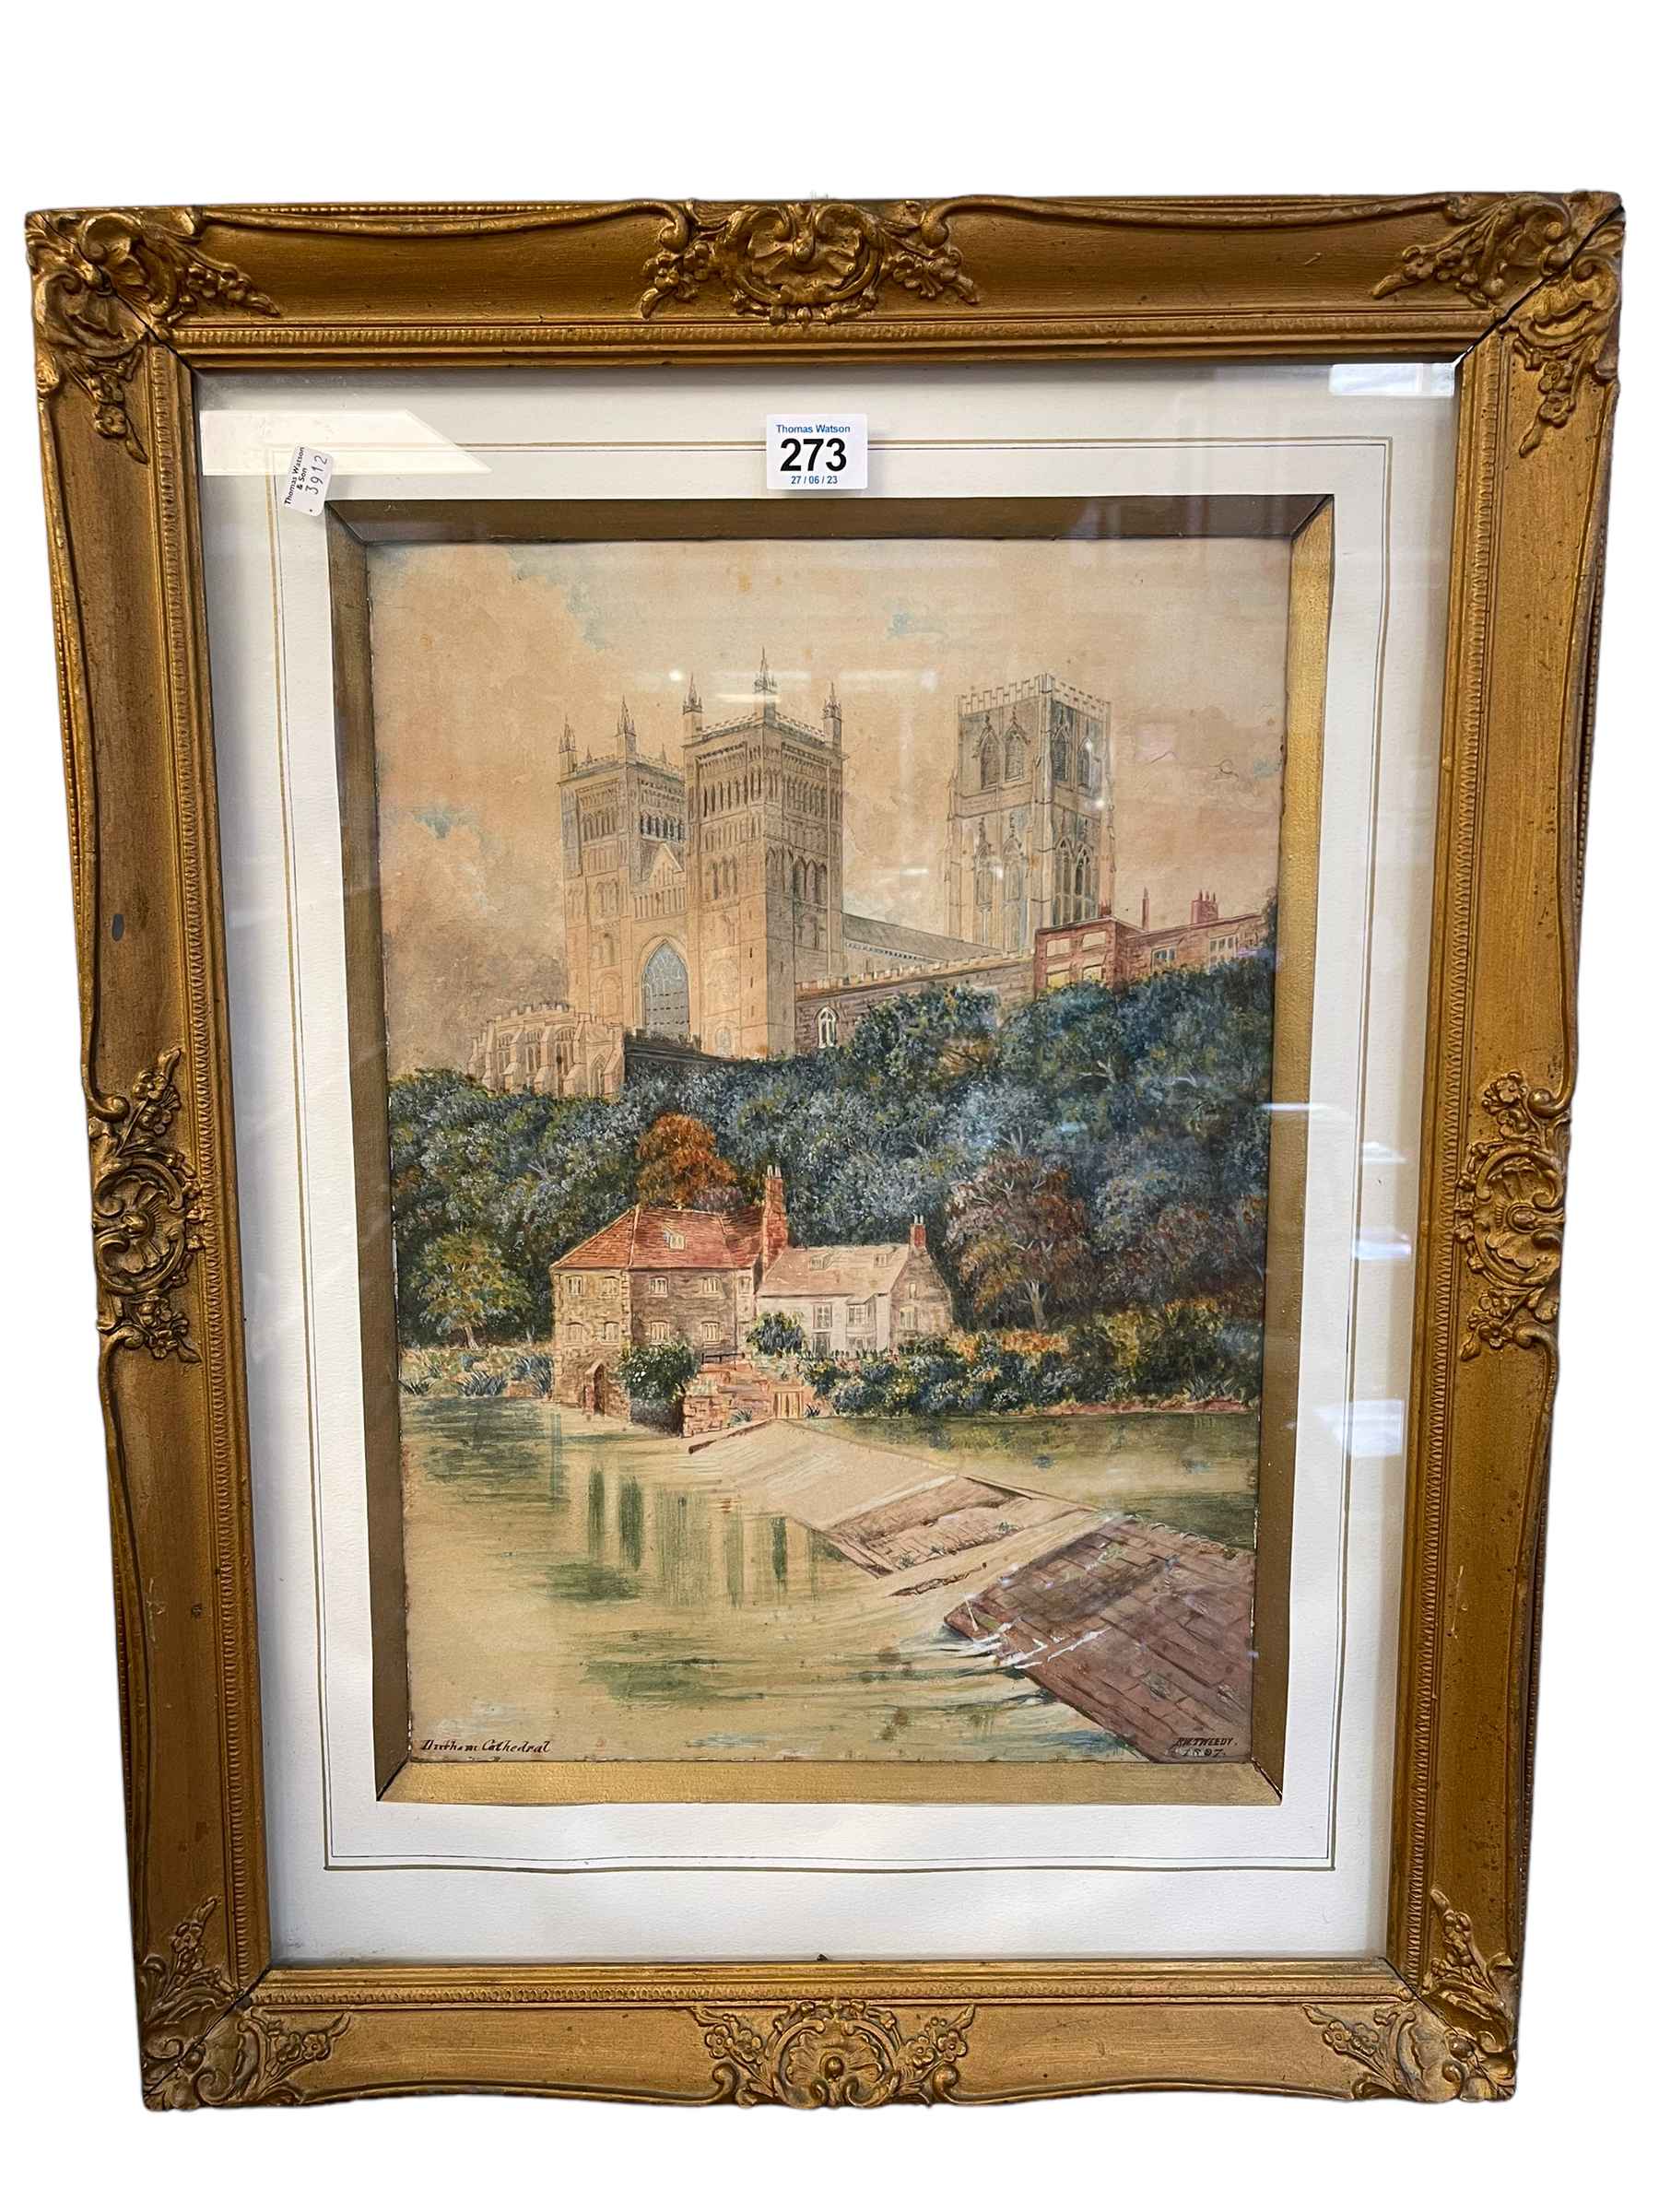 RW Tweedy 1897, watercolour of Durham Cathedral, 40cm by 29cm, framed.